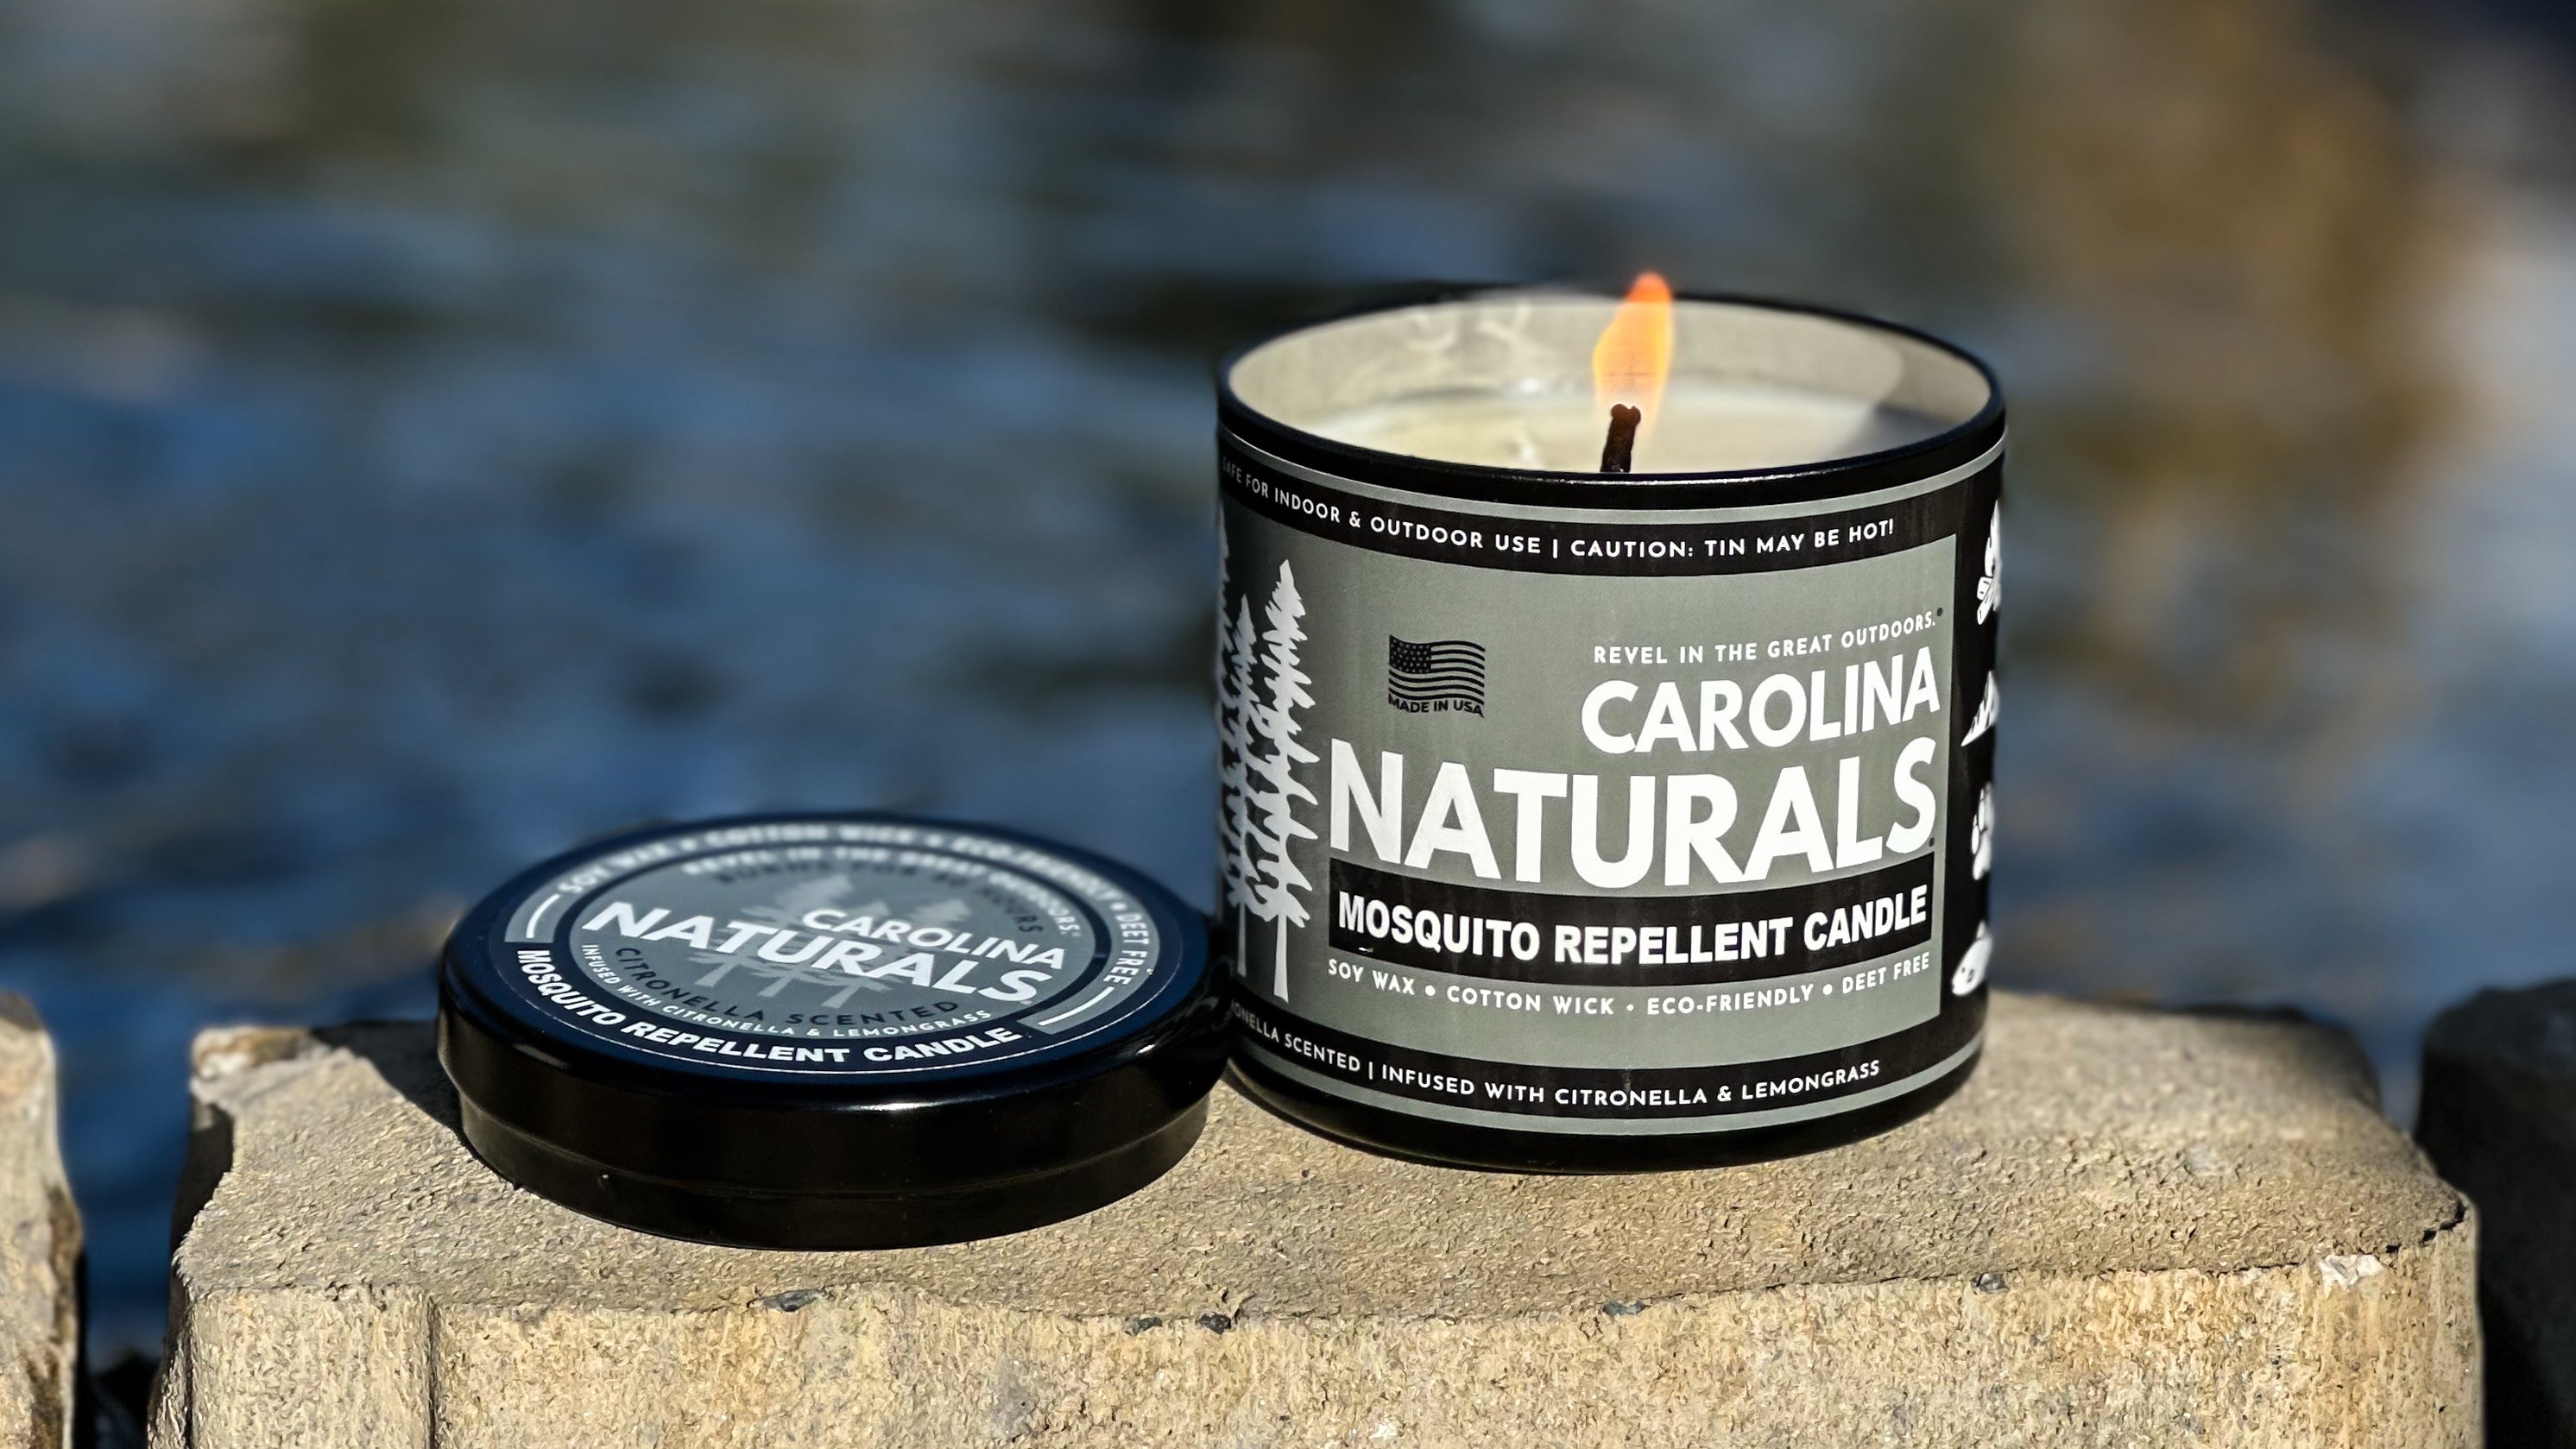 Carolina Naturals - Handcrafted Mosquito Repellent Candles